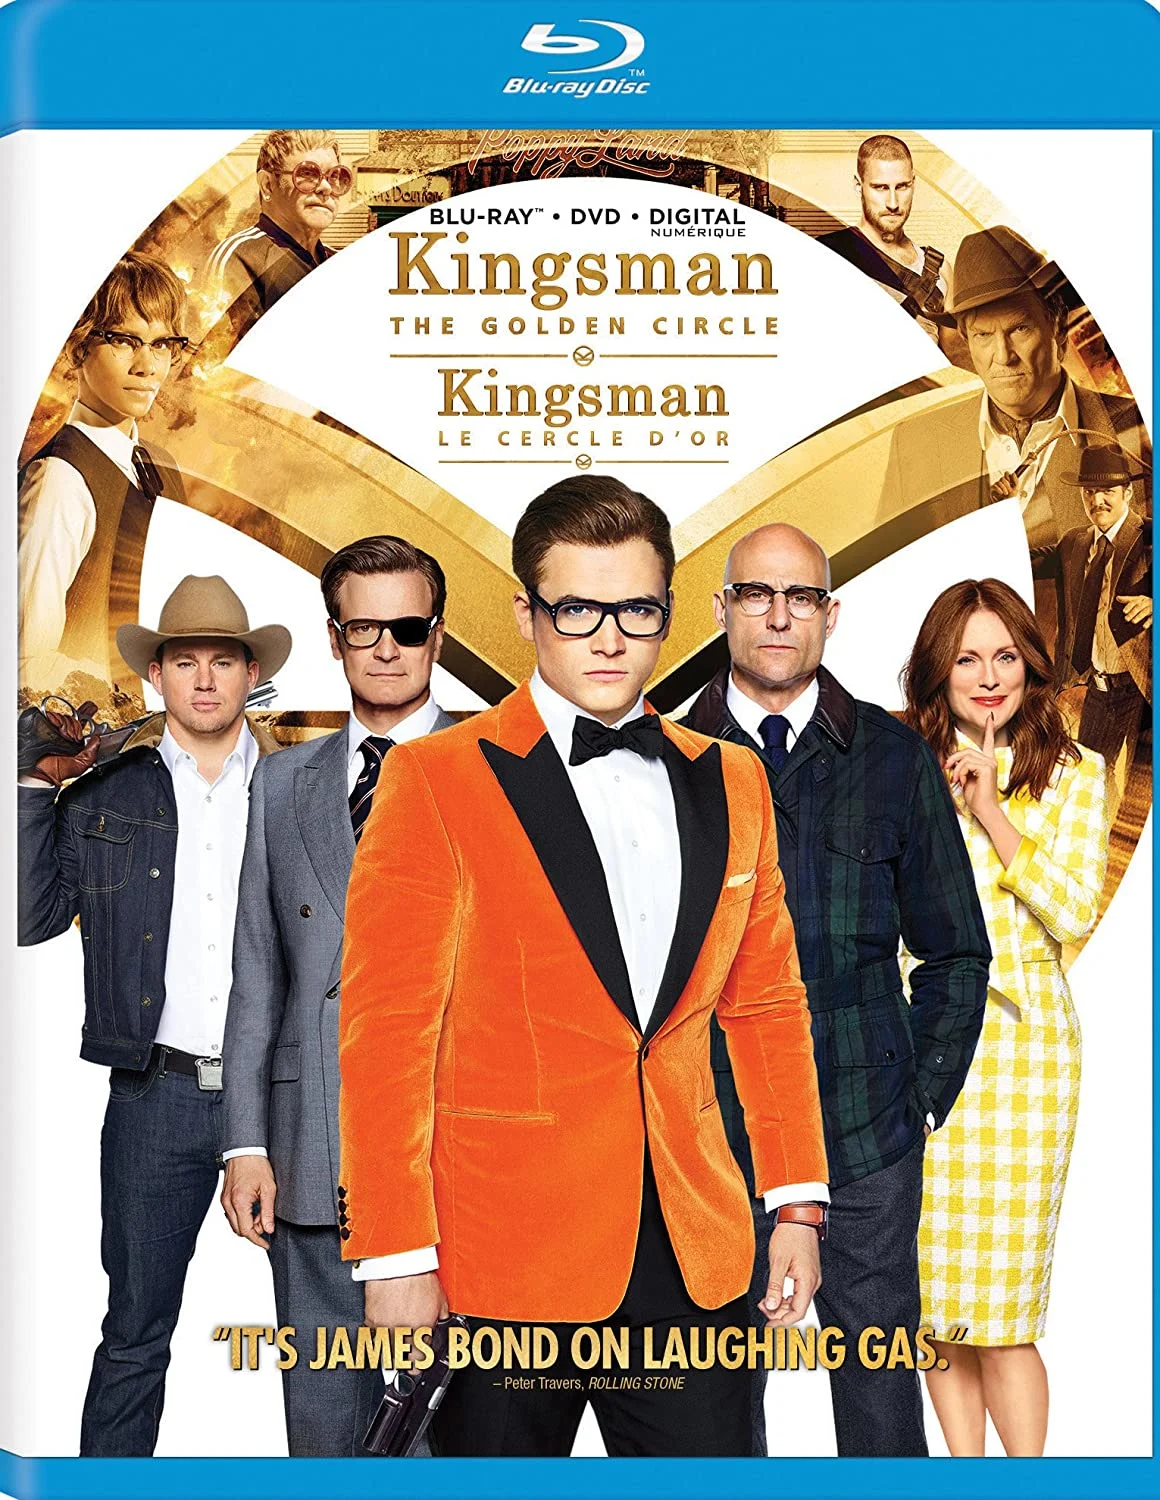 Kingsman 2: The Golden Circle (Blu-ray/DVD Combo) on MovieShack